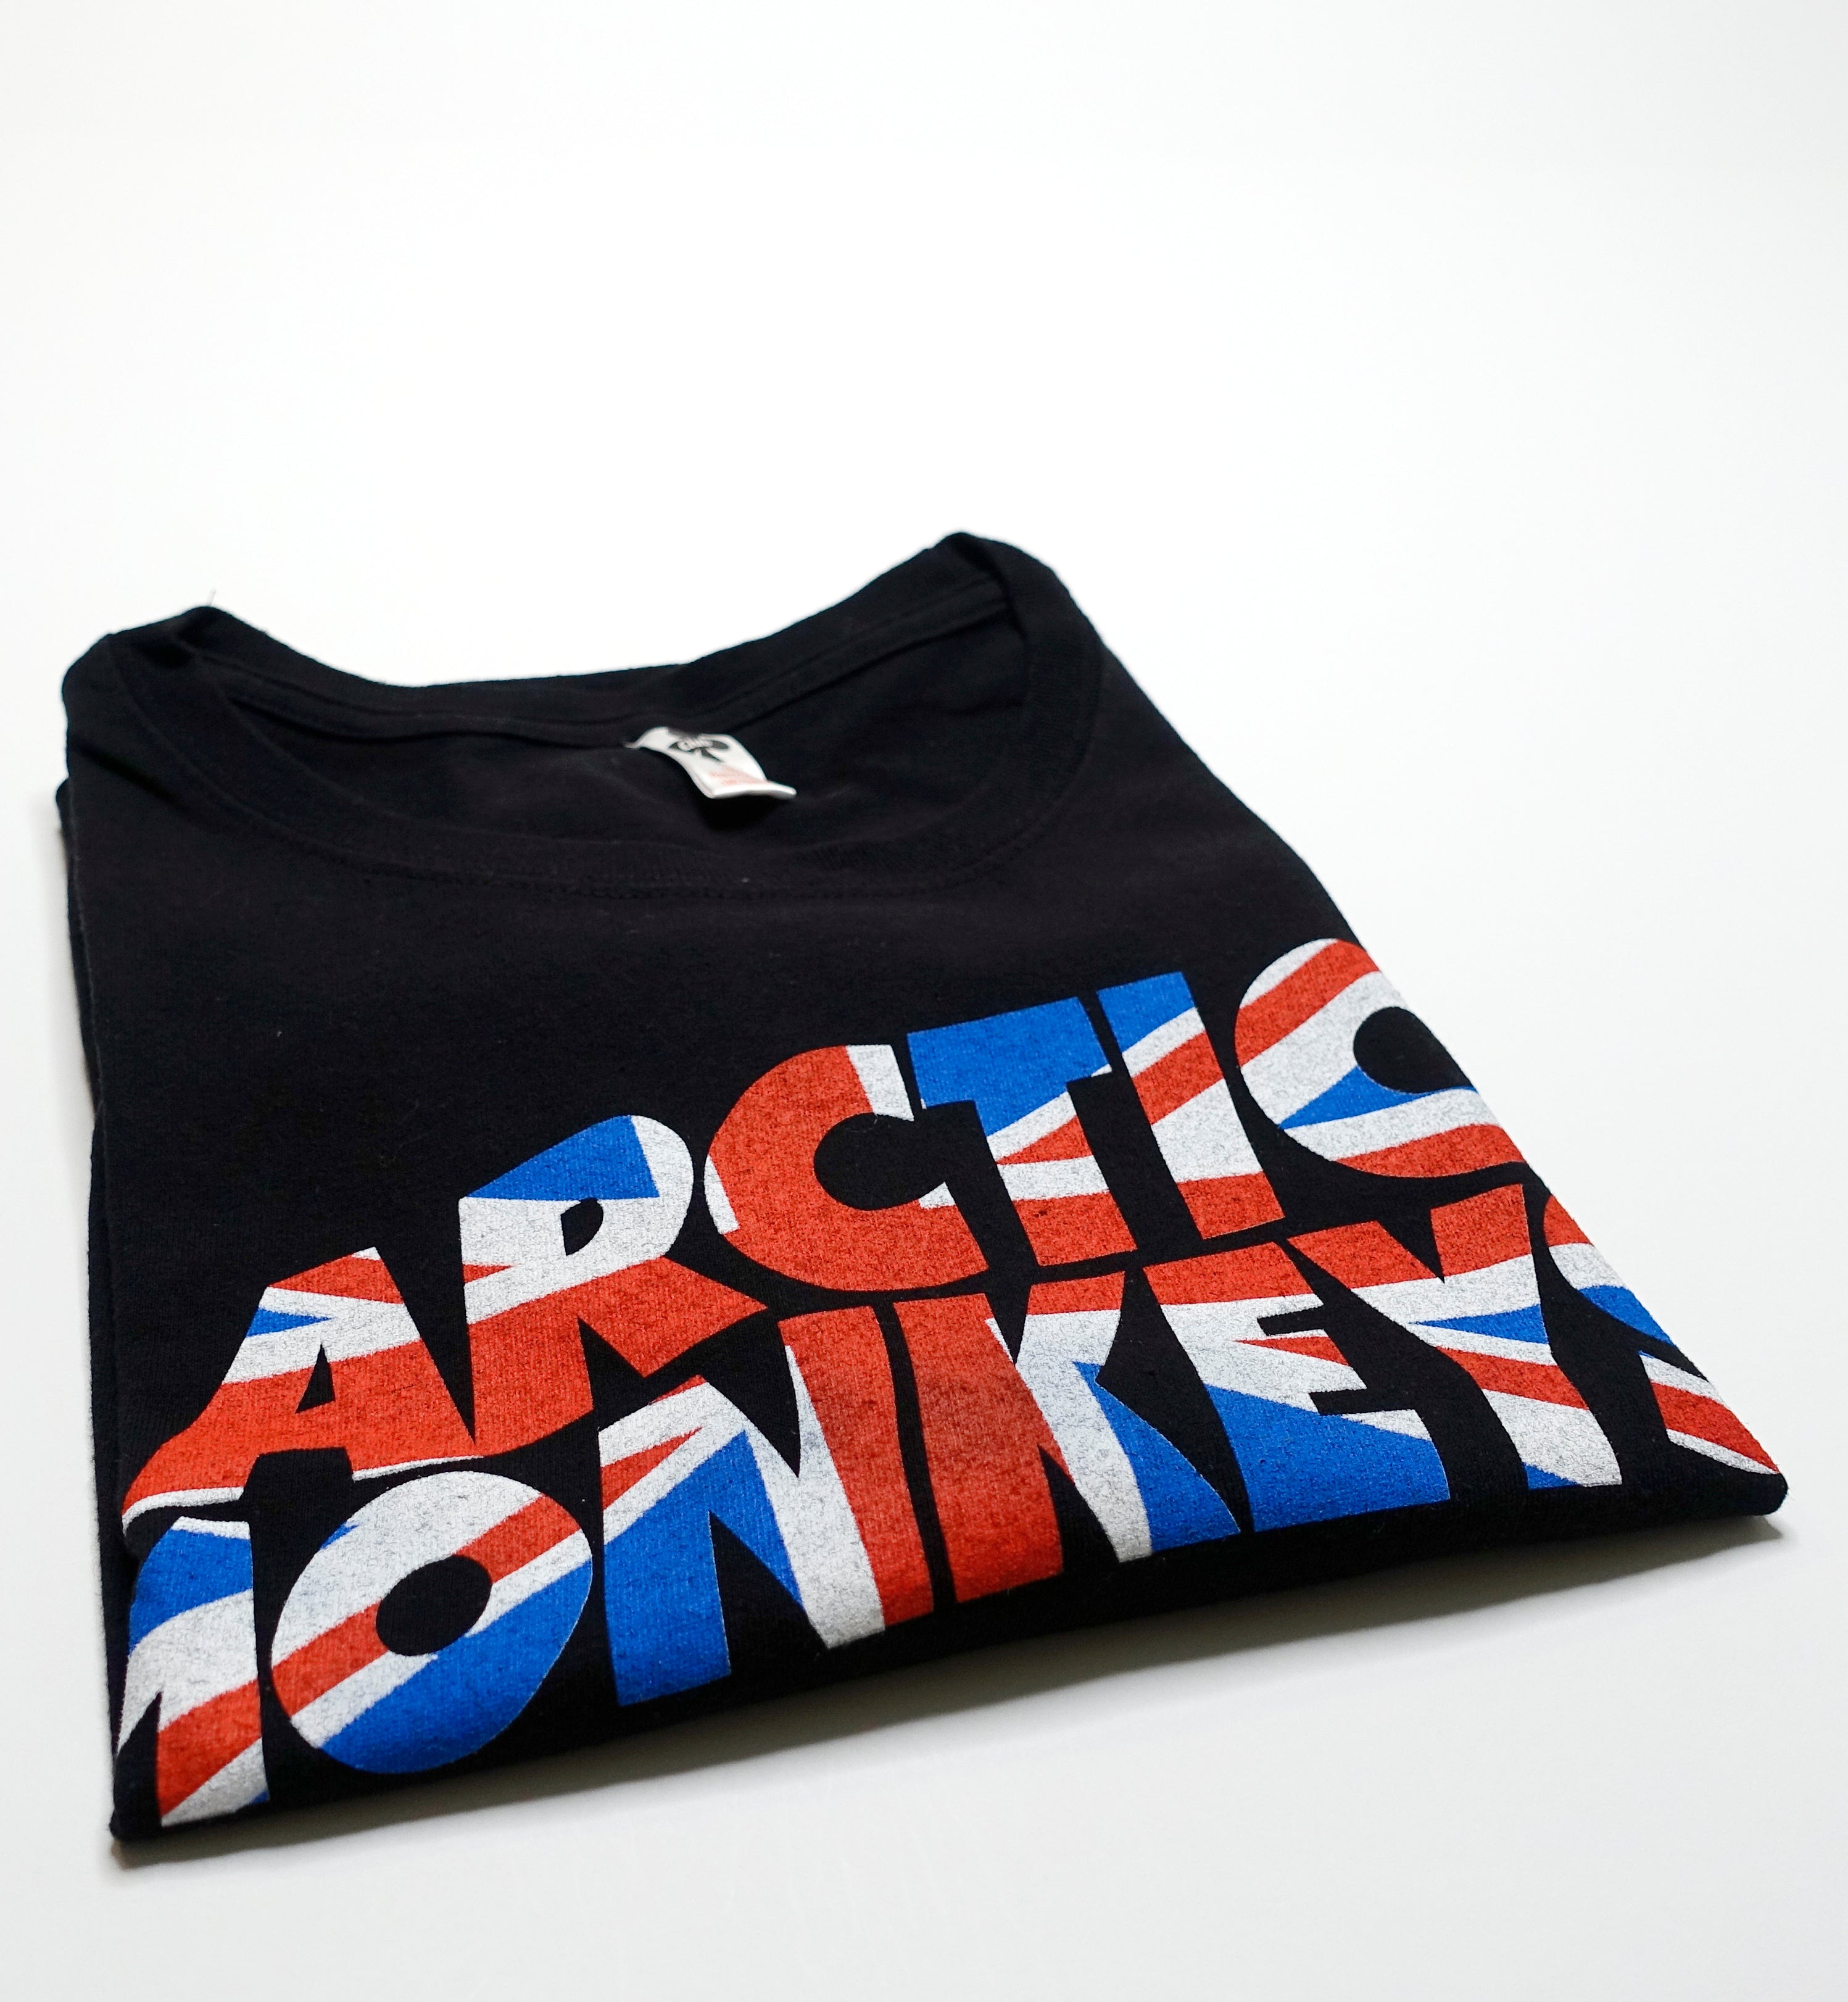 Arctic Monkeys - A.M. UK 2014 Tour Shirt Size XL